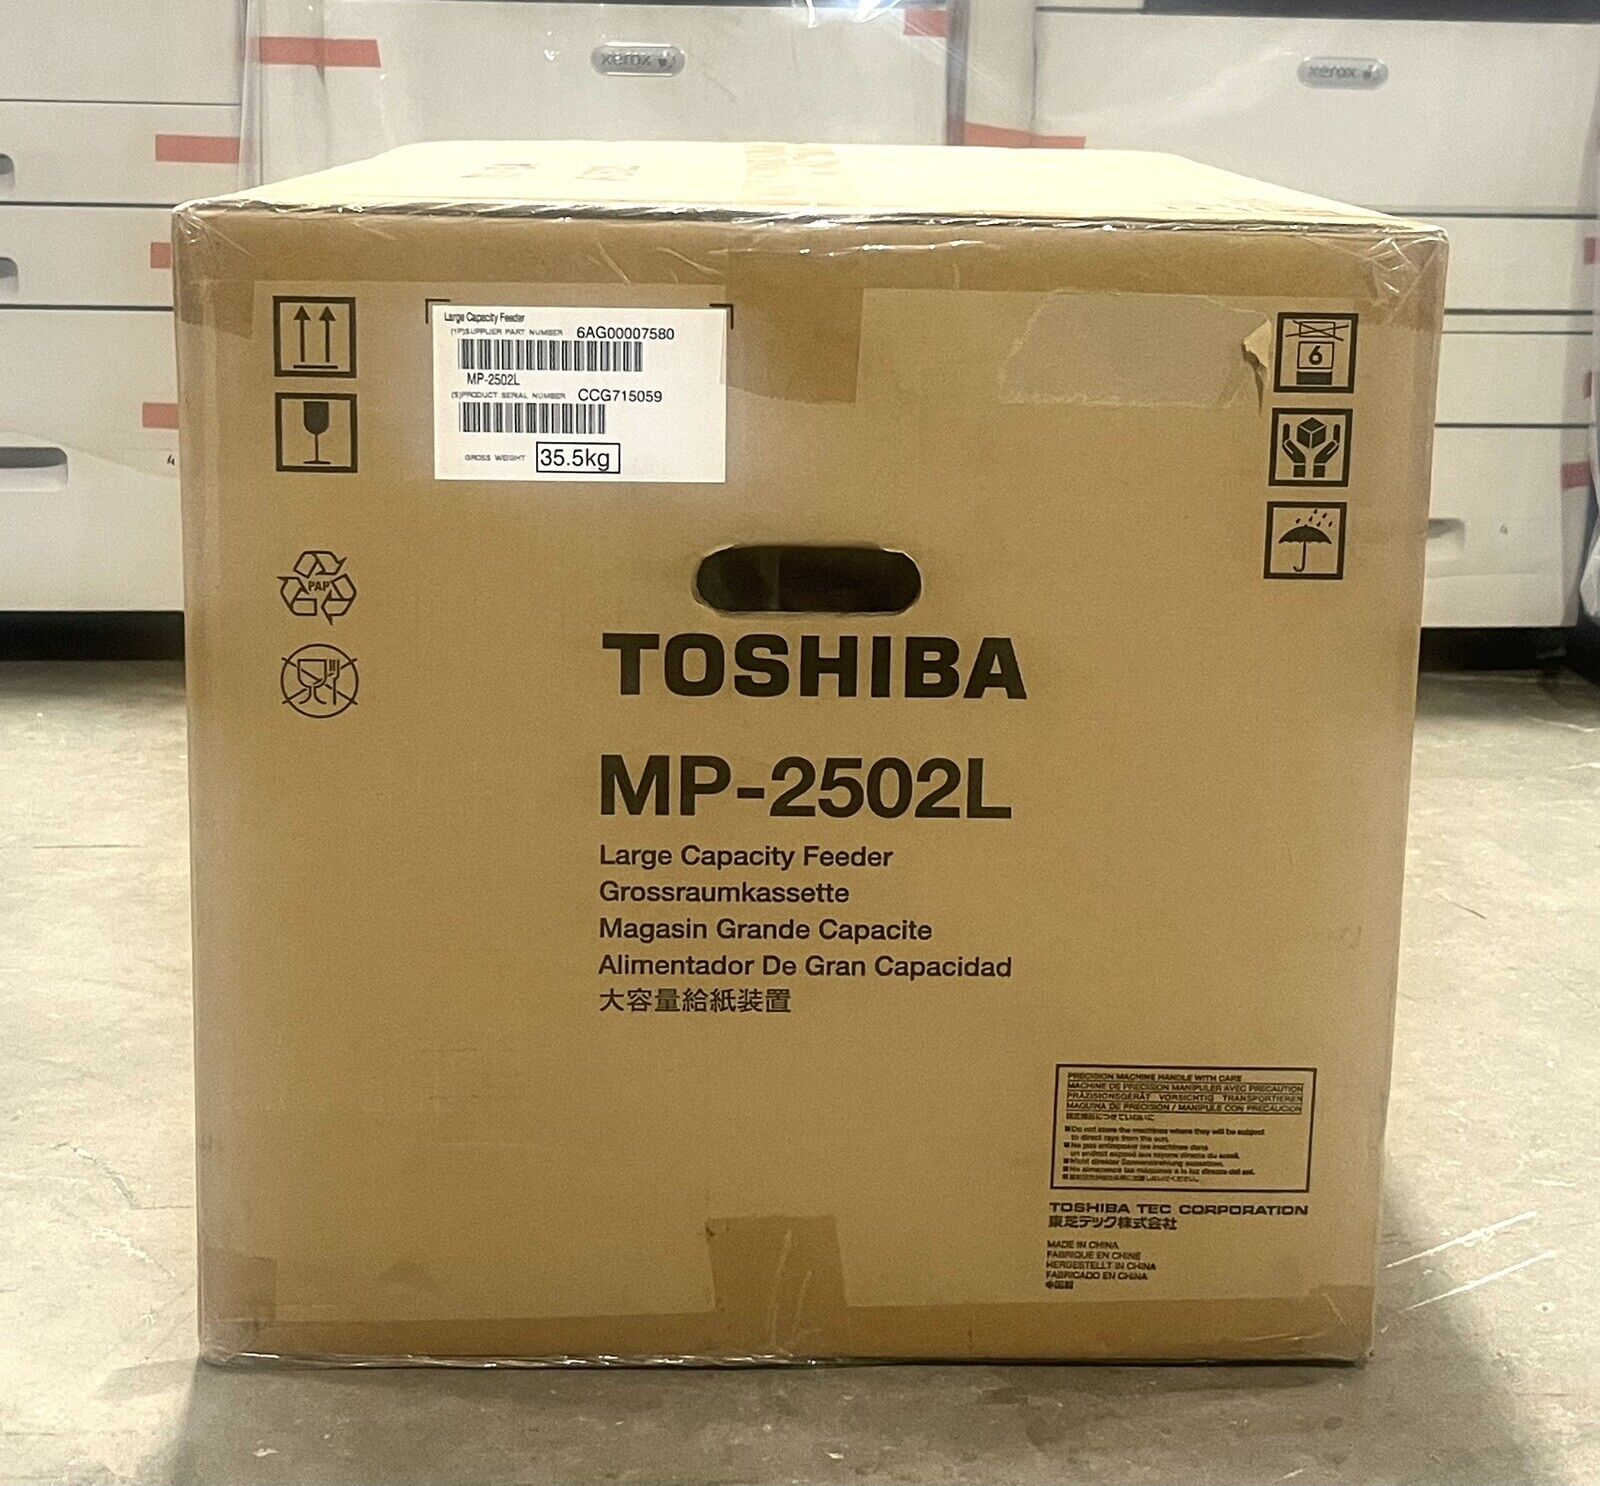 Toshiba Large Capacity Feeder MP-2502L (CAG00007580) (CCG715059) Genuine New